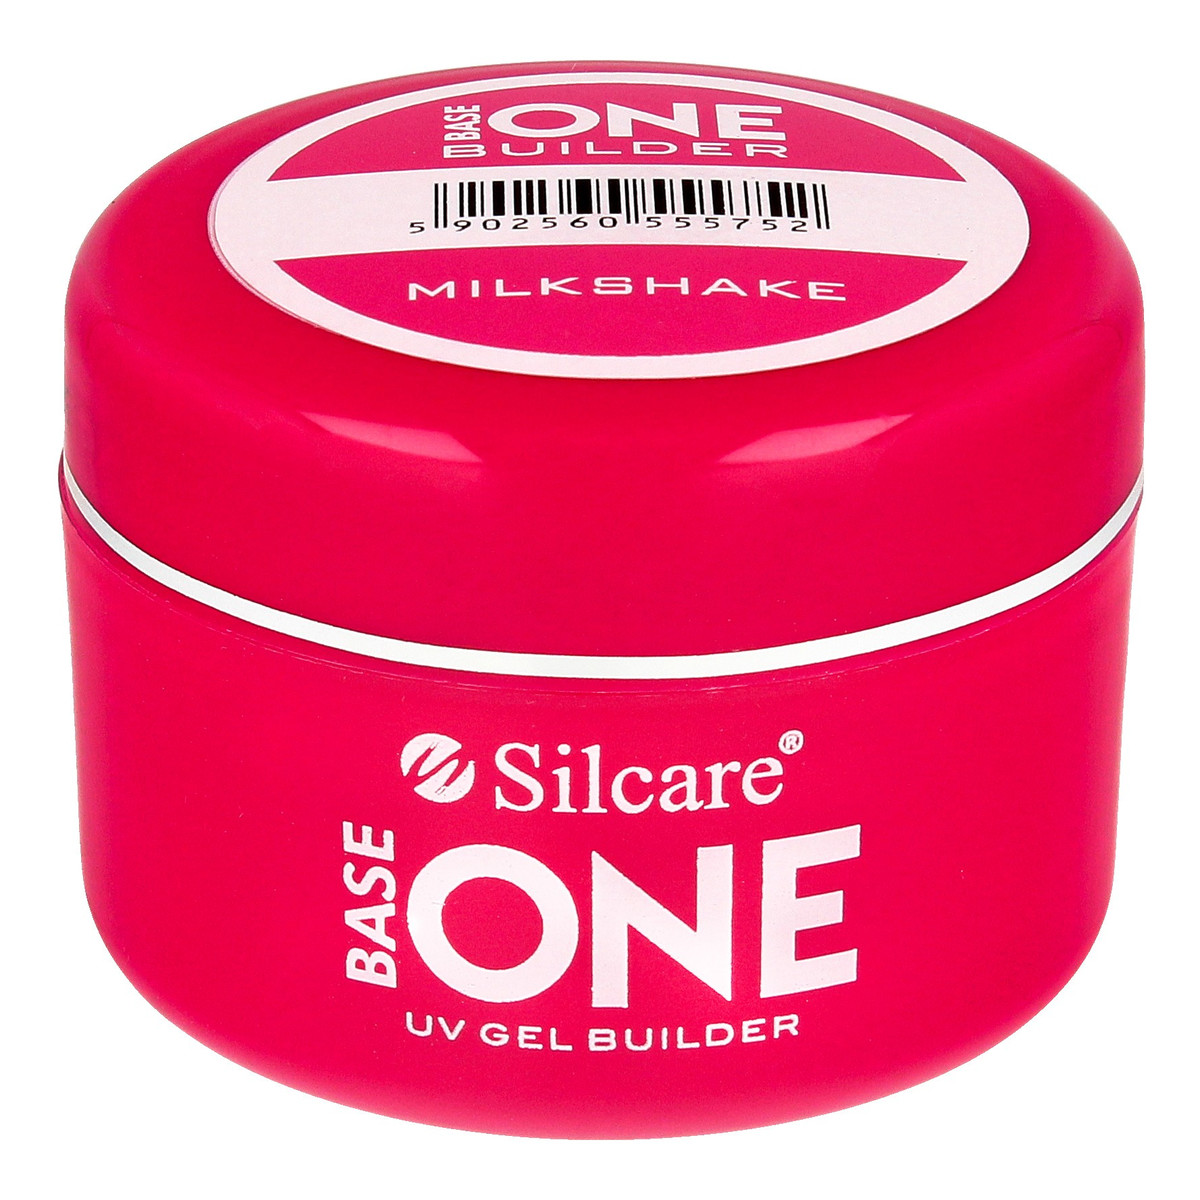 Silcare Silcare base one gel base milk shake 100g